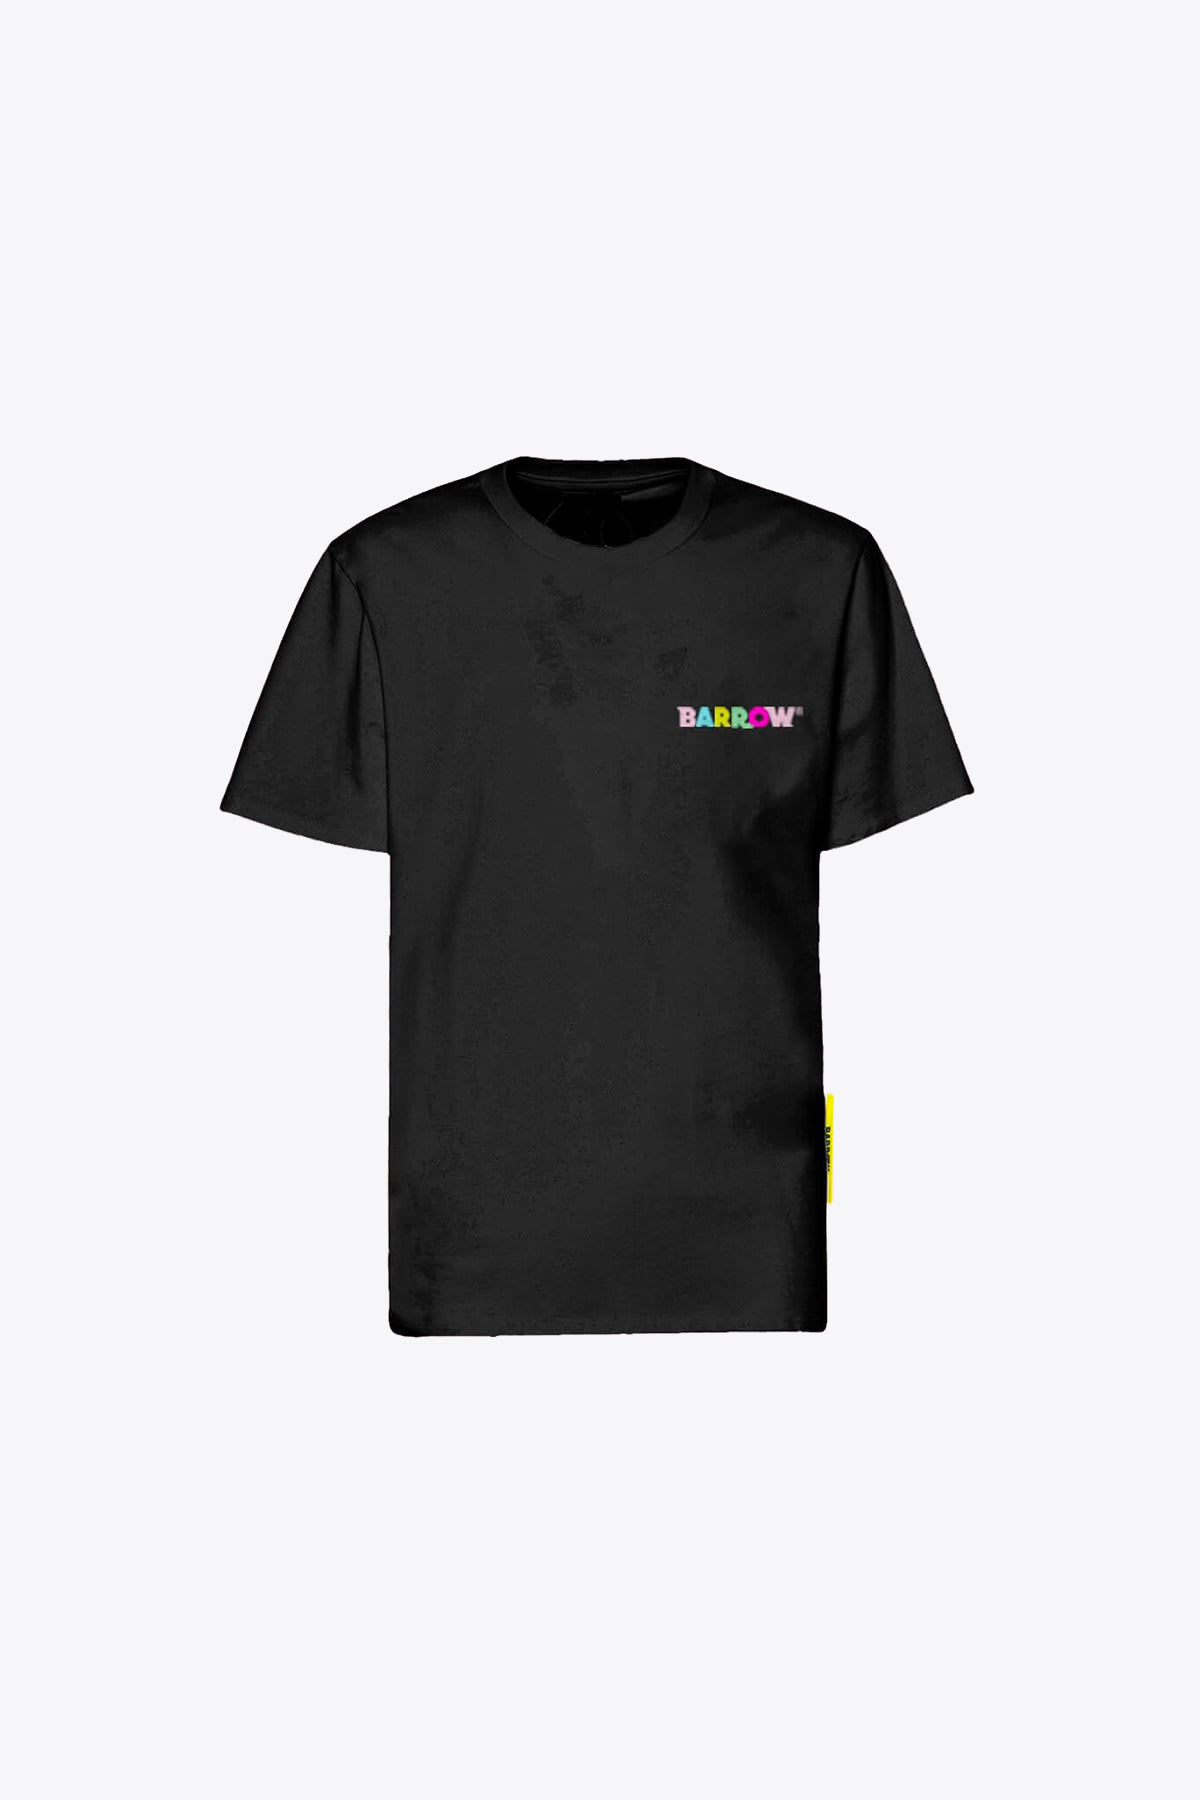 Barrow T-shirt Jersey Unisex Black cotton t-shirt with multicolor chest logo